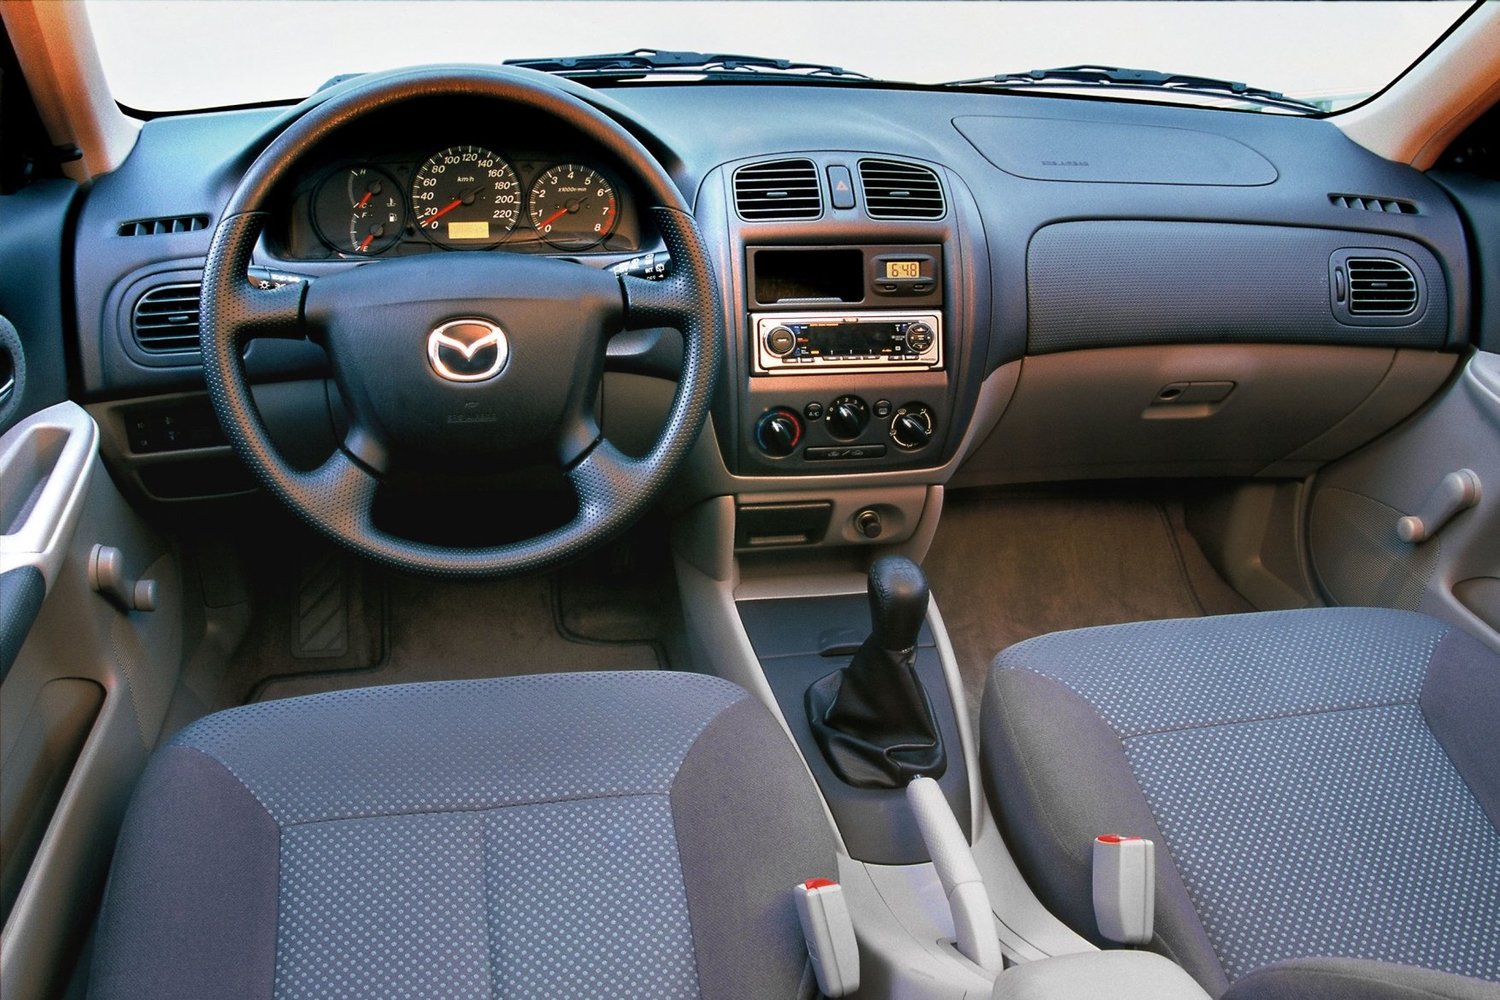 седан Mazda 323 2000 - 2003г выпуска модификация 1.3 MT (73 л.с.)